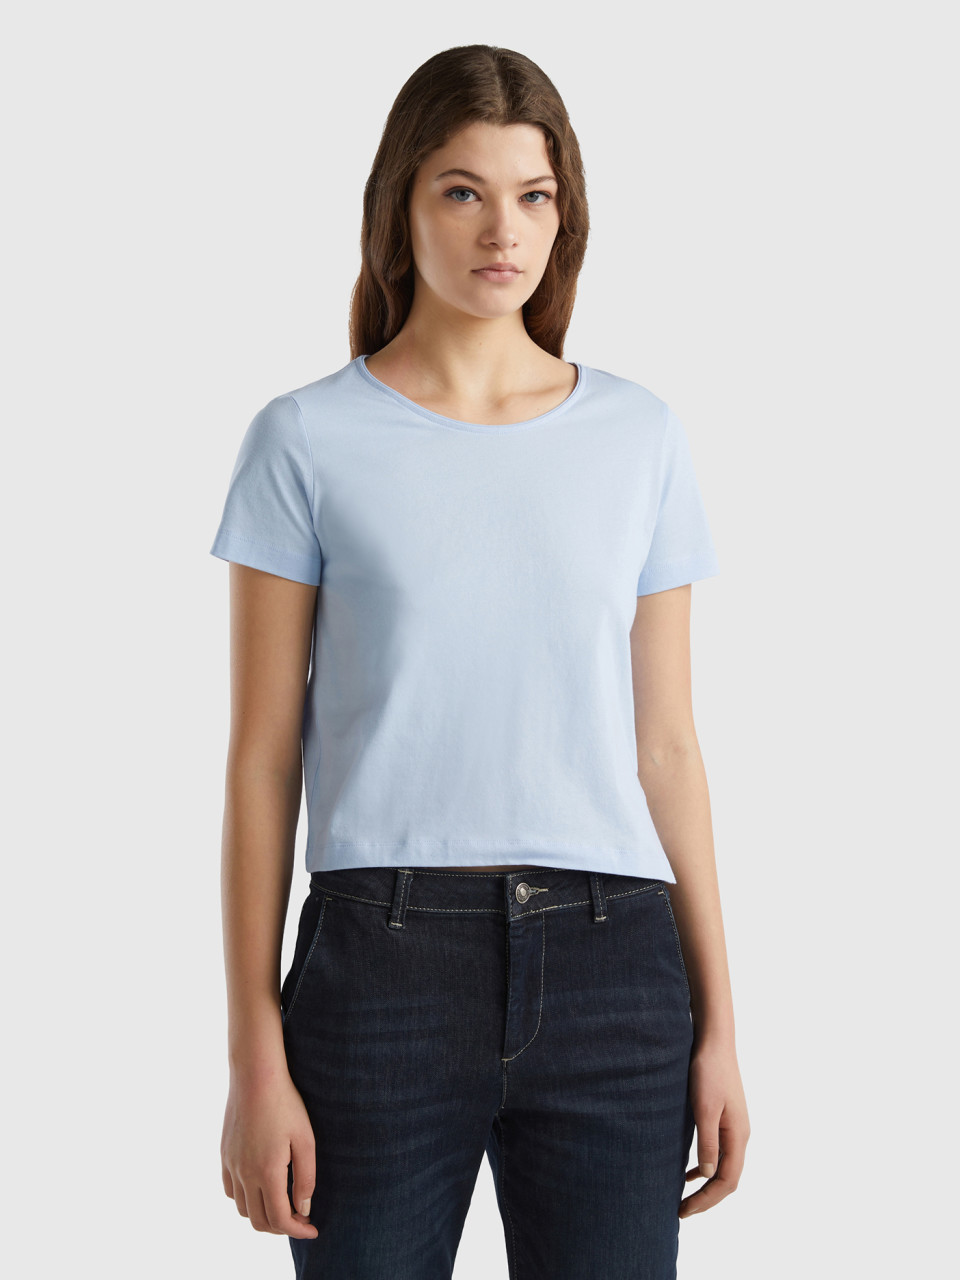 Benetton, Short Sleeve T-shirt With Slit, Sky Blue, Women